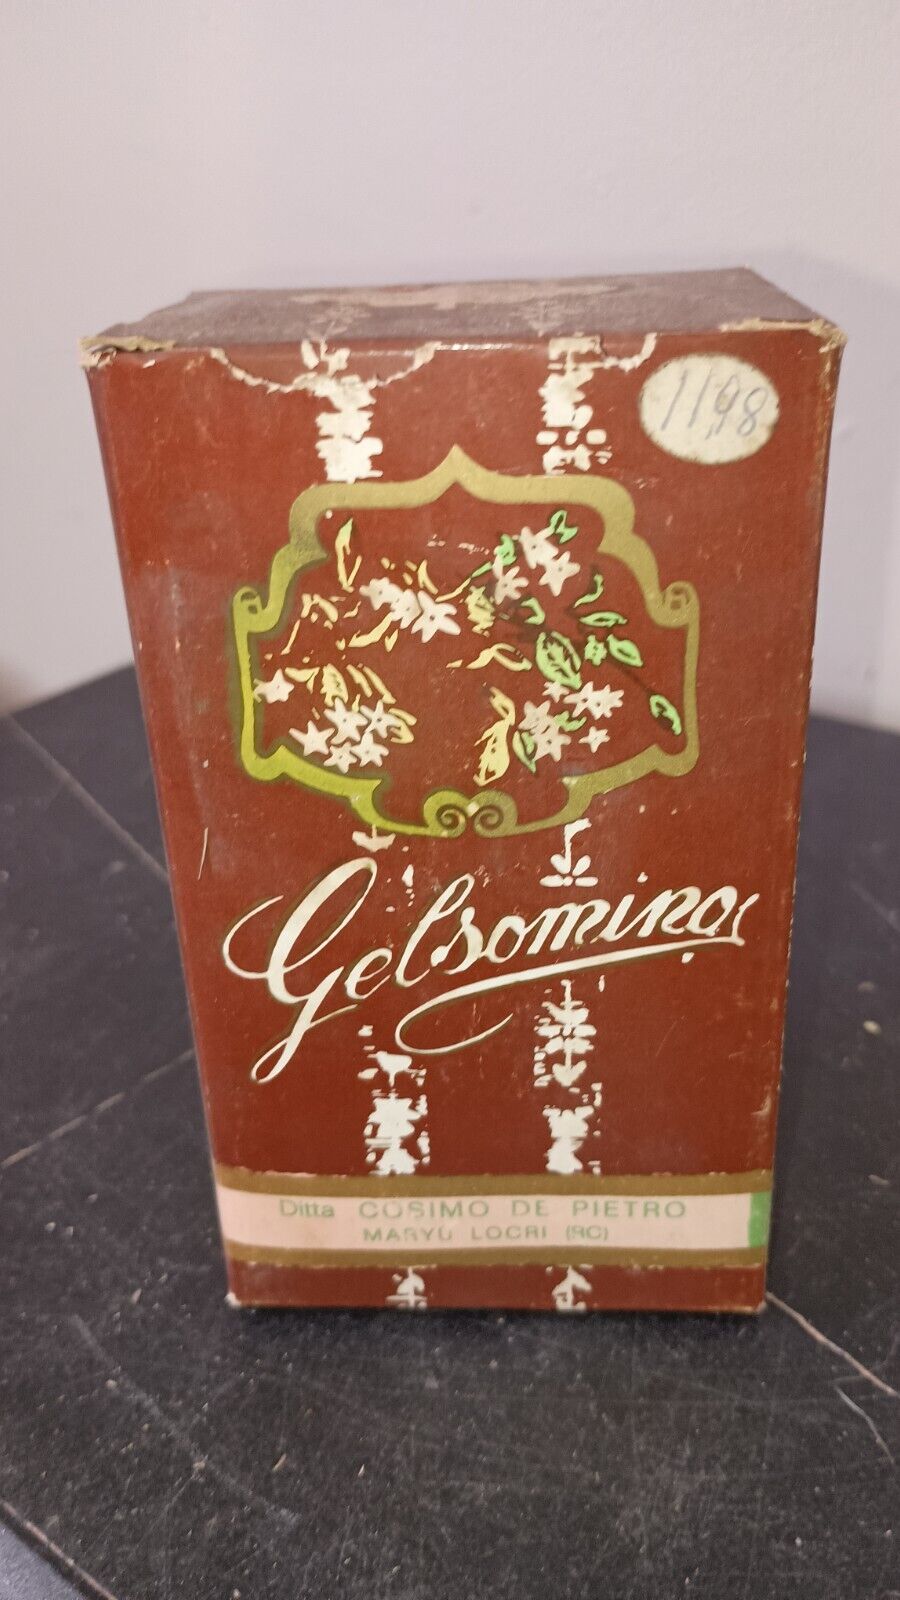 Rare Vintage New Old Stock Gelsomina Cosimo De Pietro Discontinued Perfume 4 oz